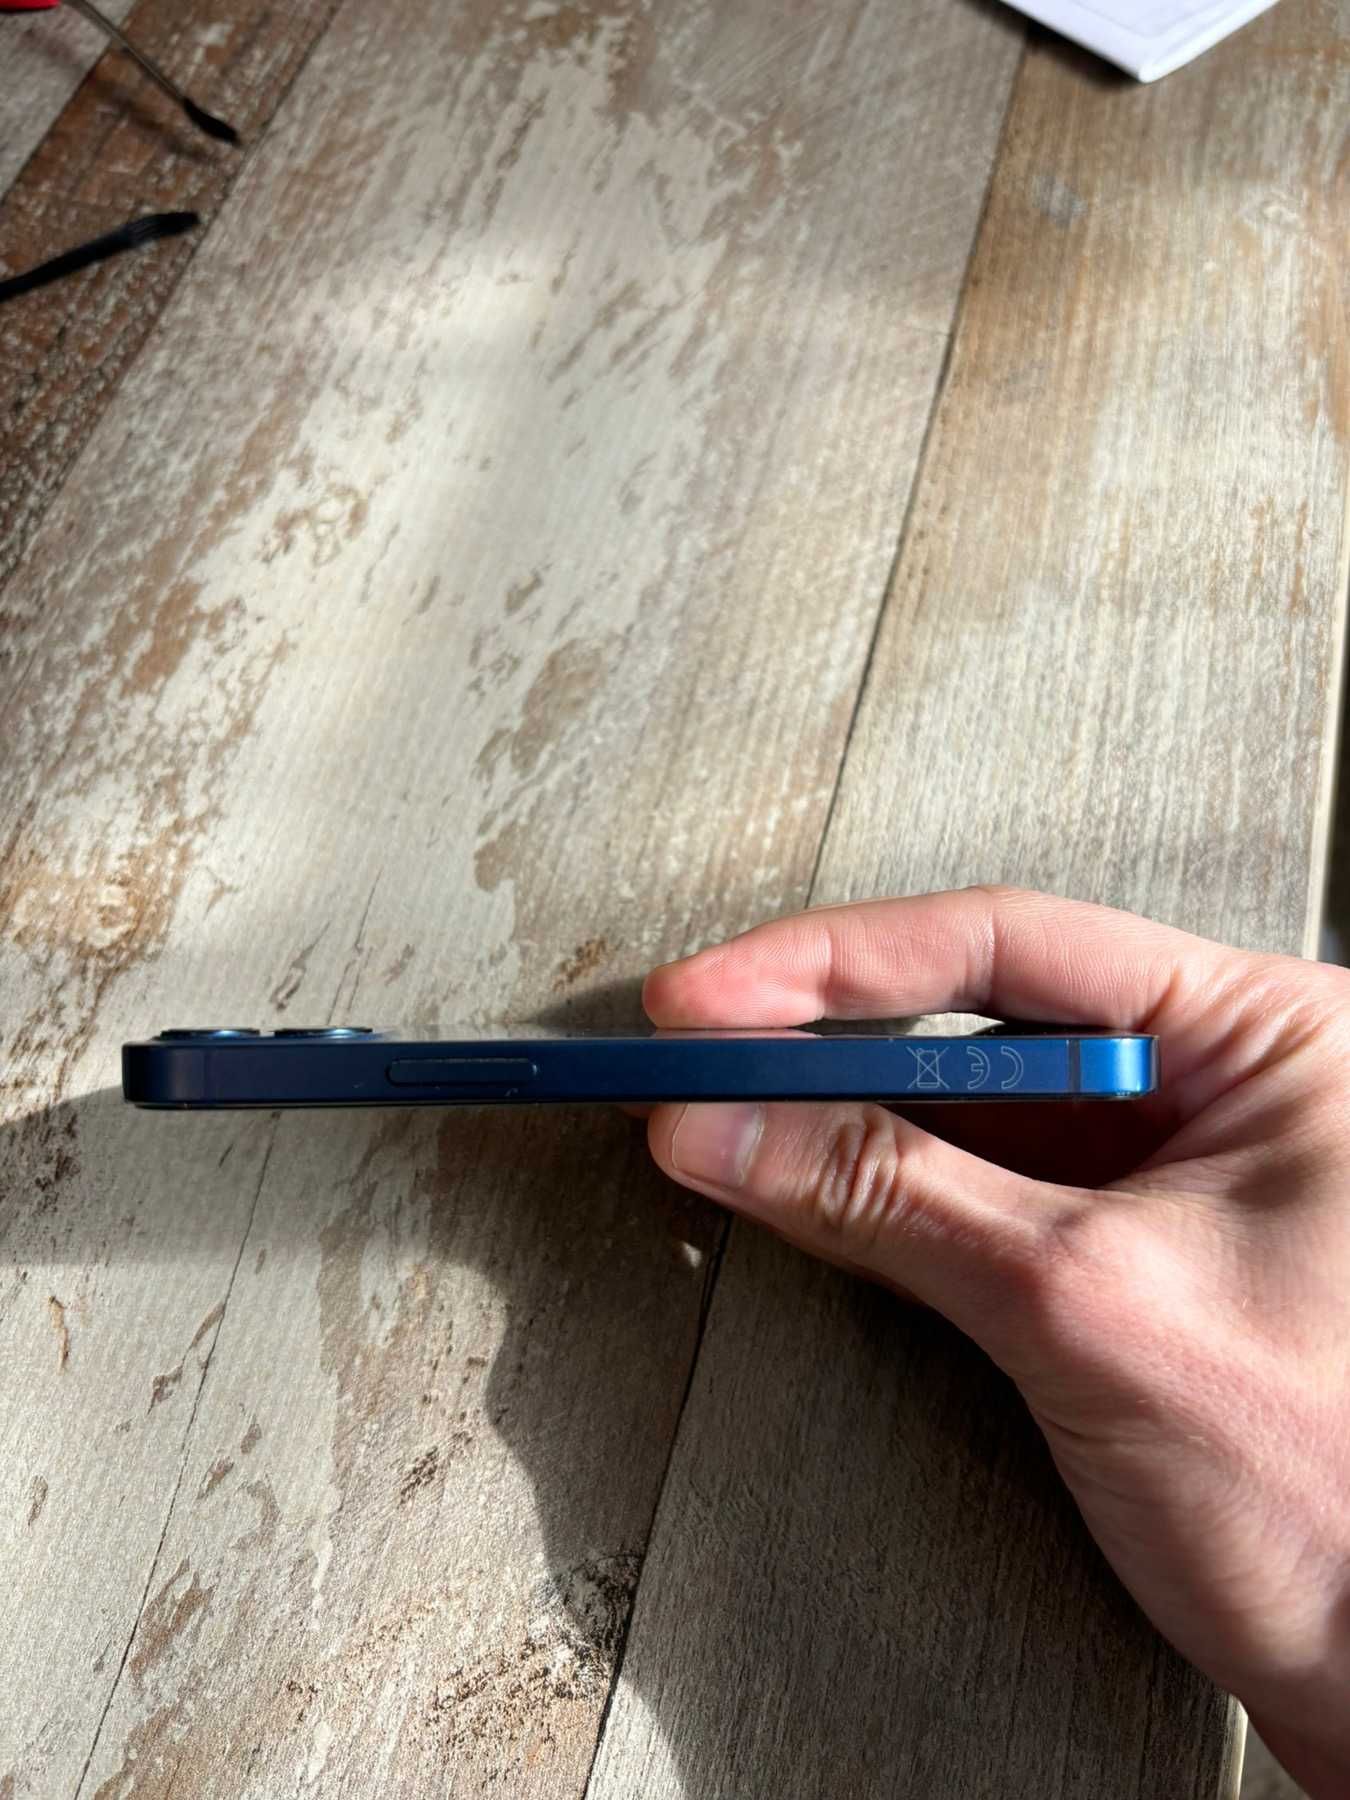 iphone 12 mini blue 64gb